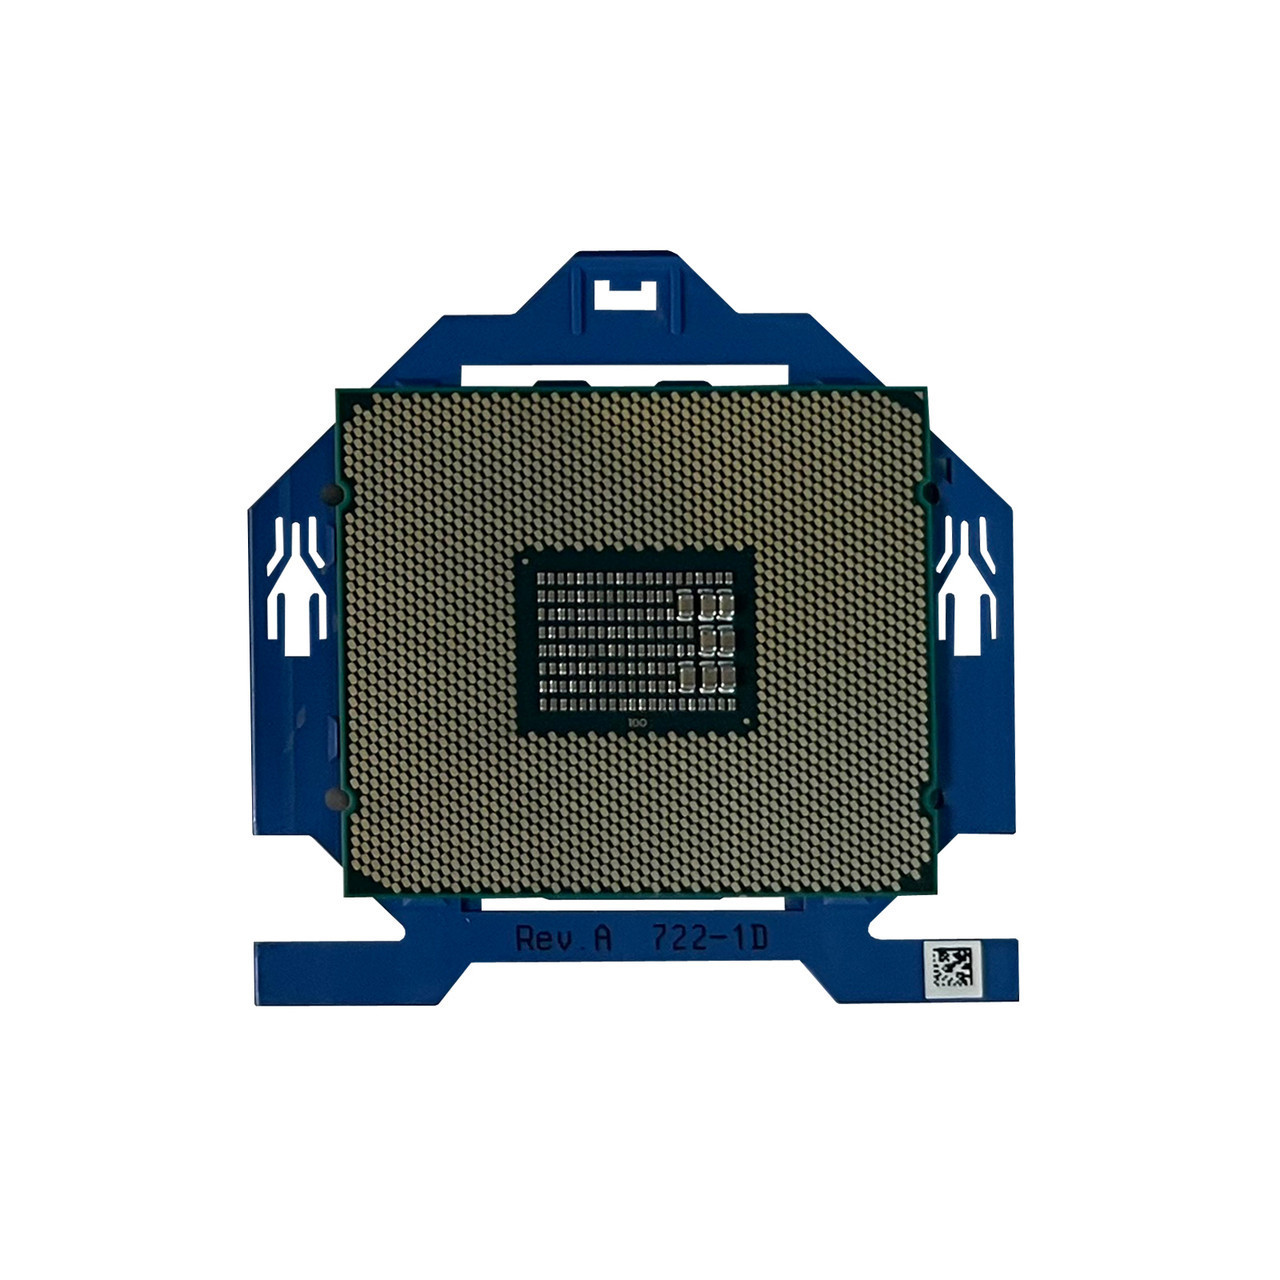 HP 826110-L21 | ML110 Gen9 Xeon E5-1660 V4 8C 3.2Ghz Processor